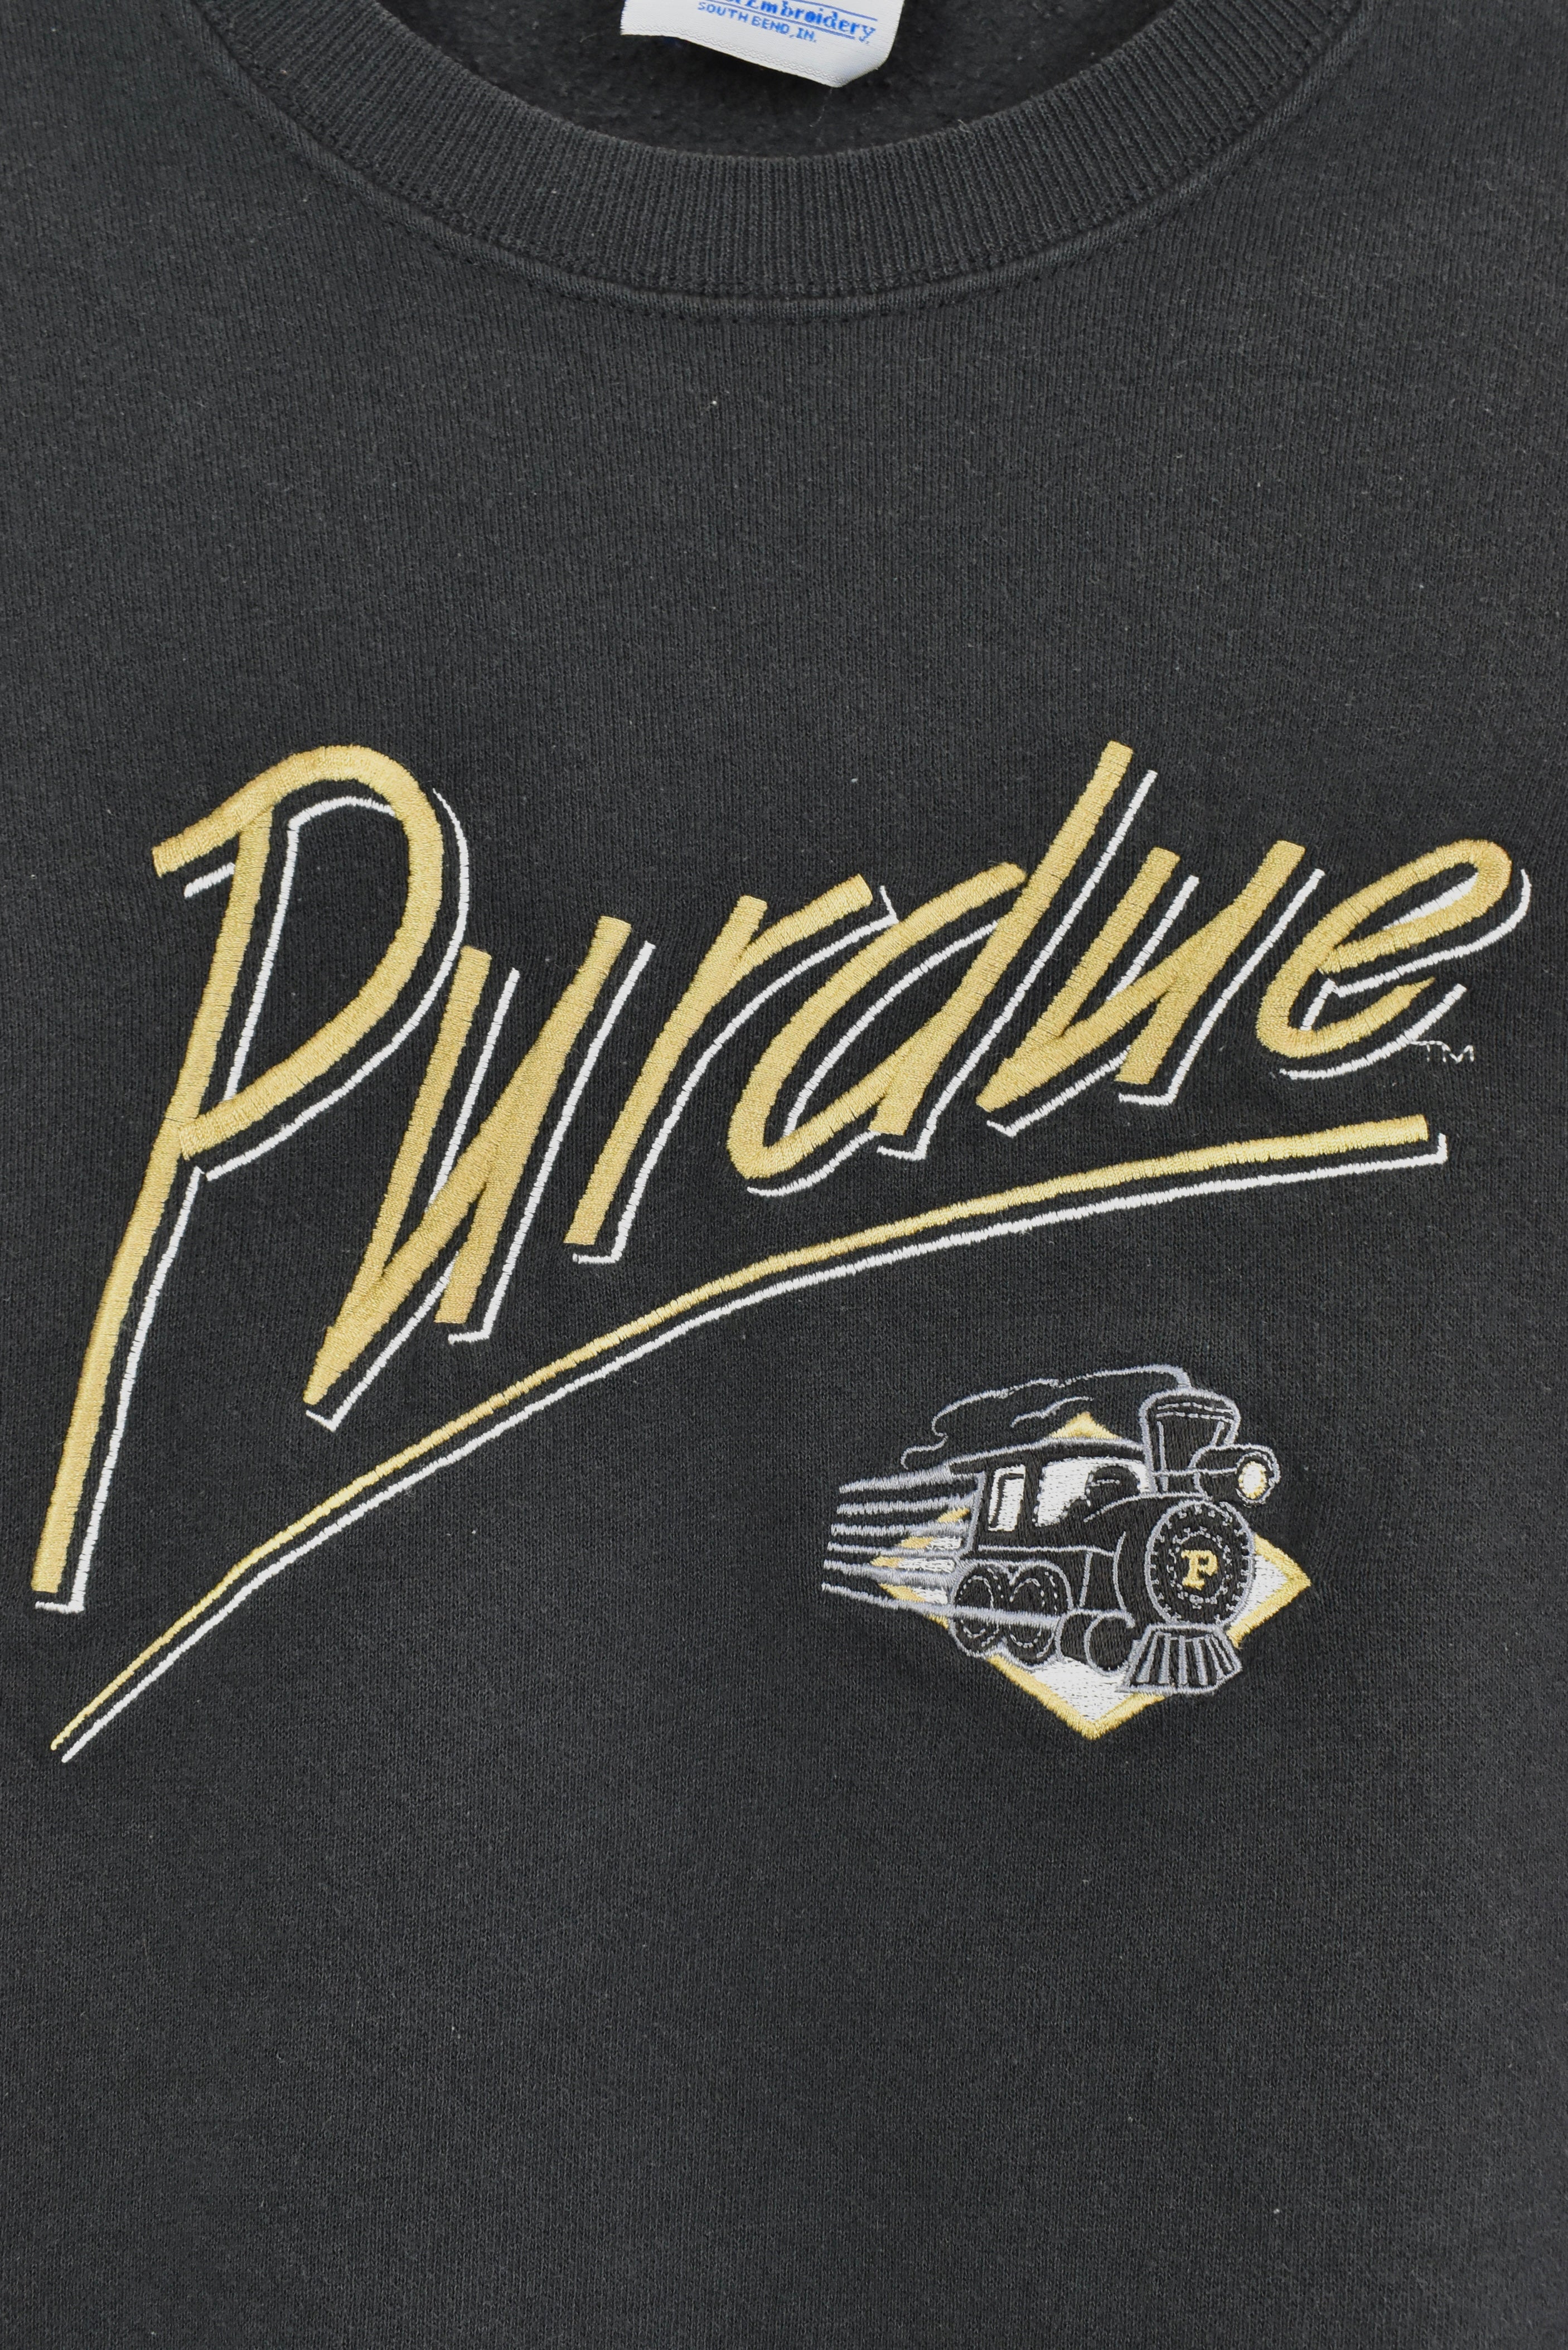 Vintage Purdue University embroidered black sweatshirt | Small COLLEGE